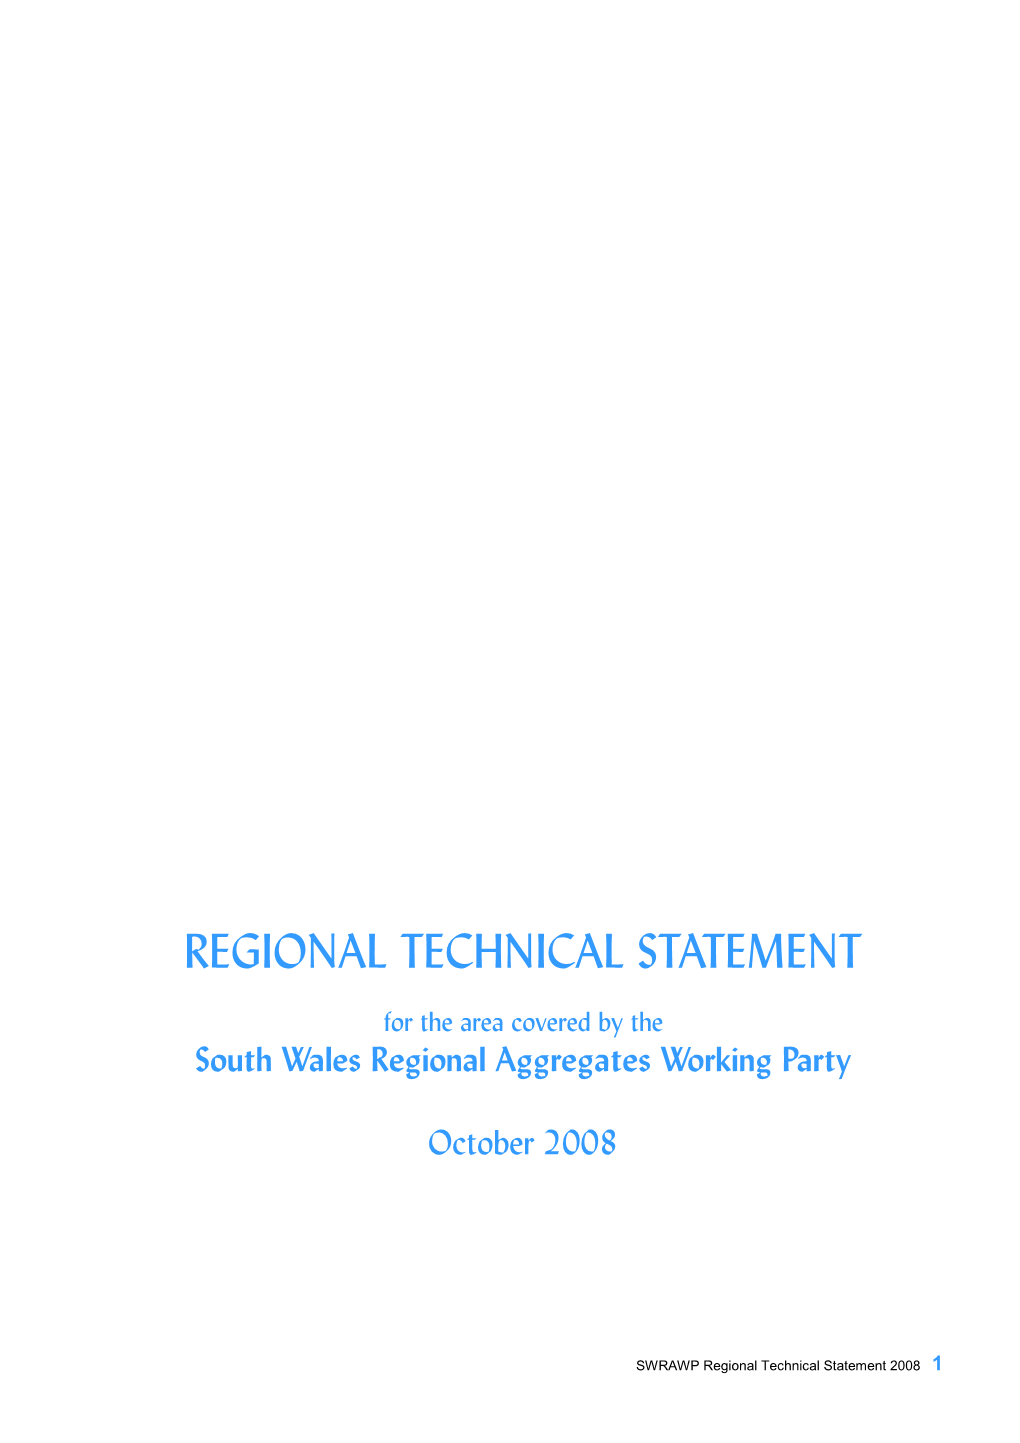 SWRAWP Regional Technical Statement 2008.Pub